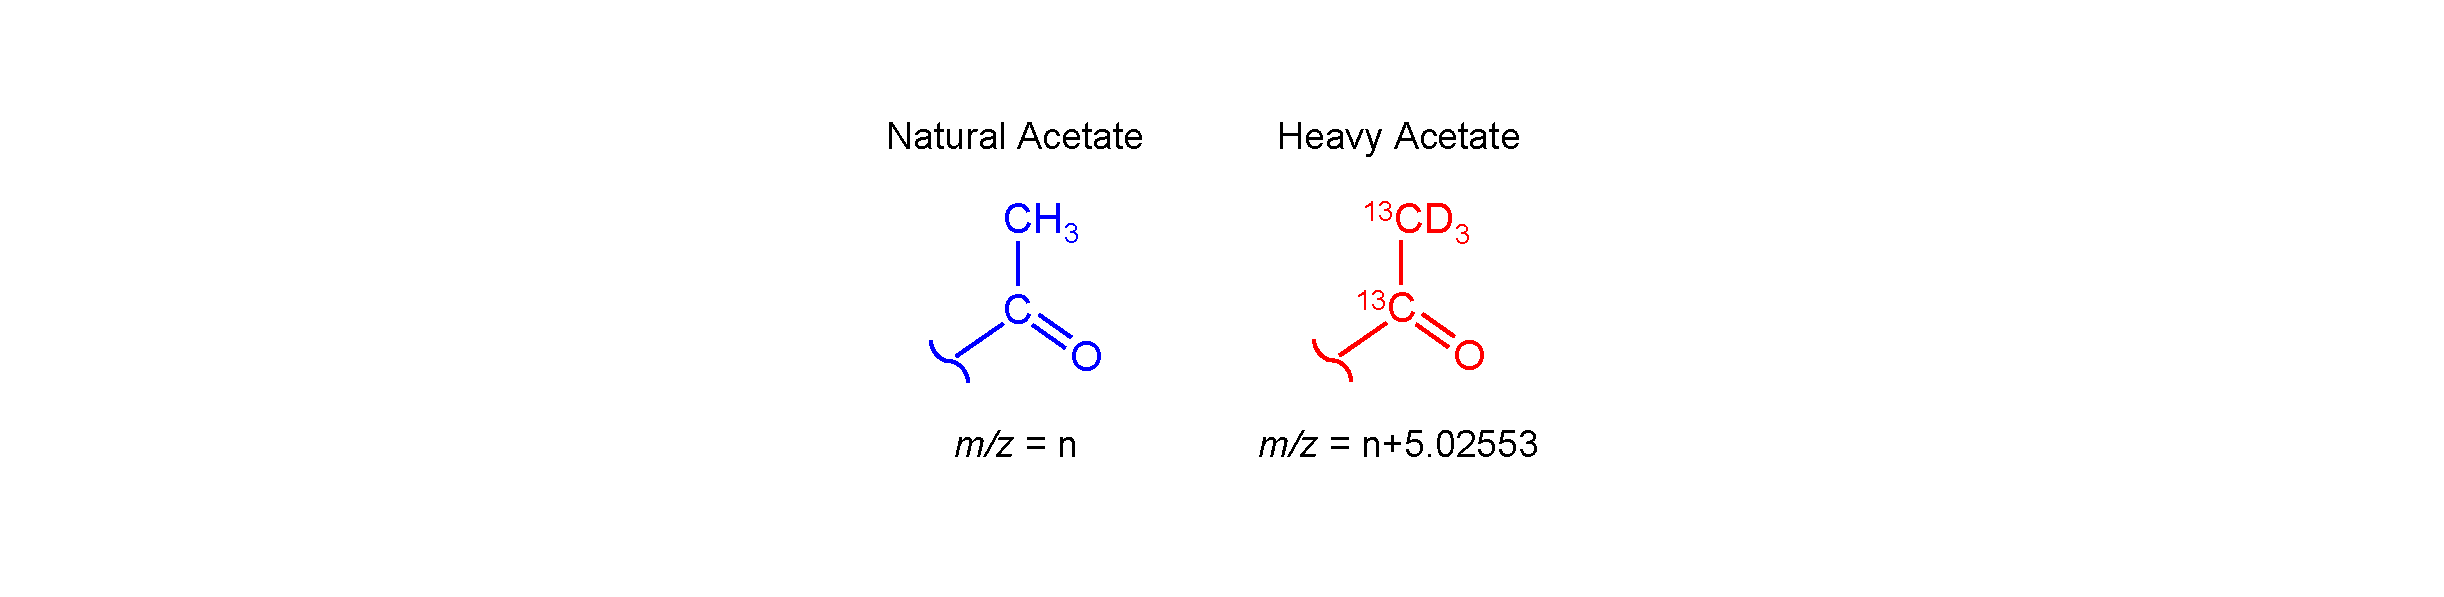 heavy acetate